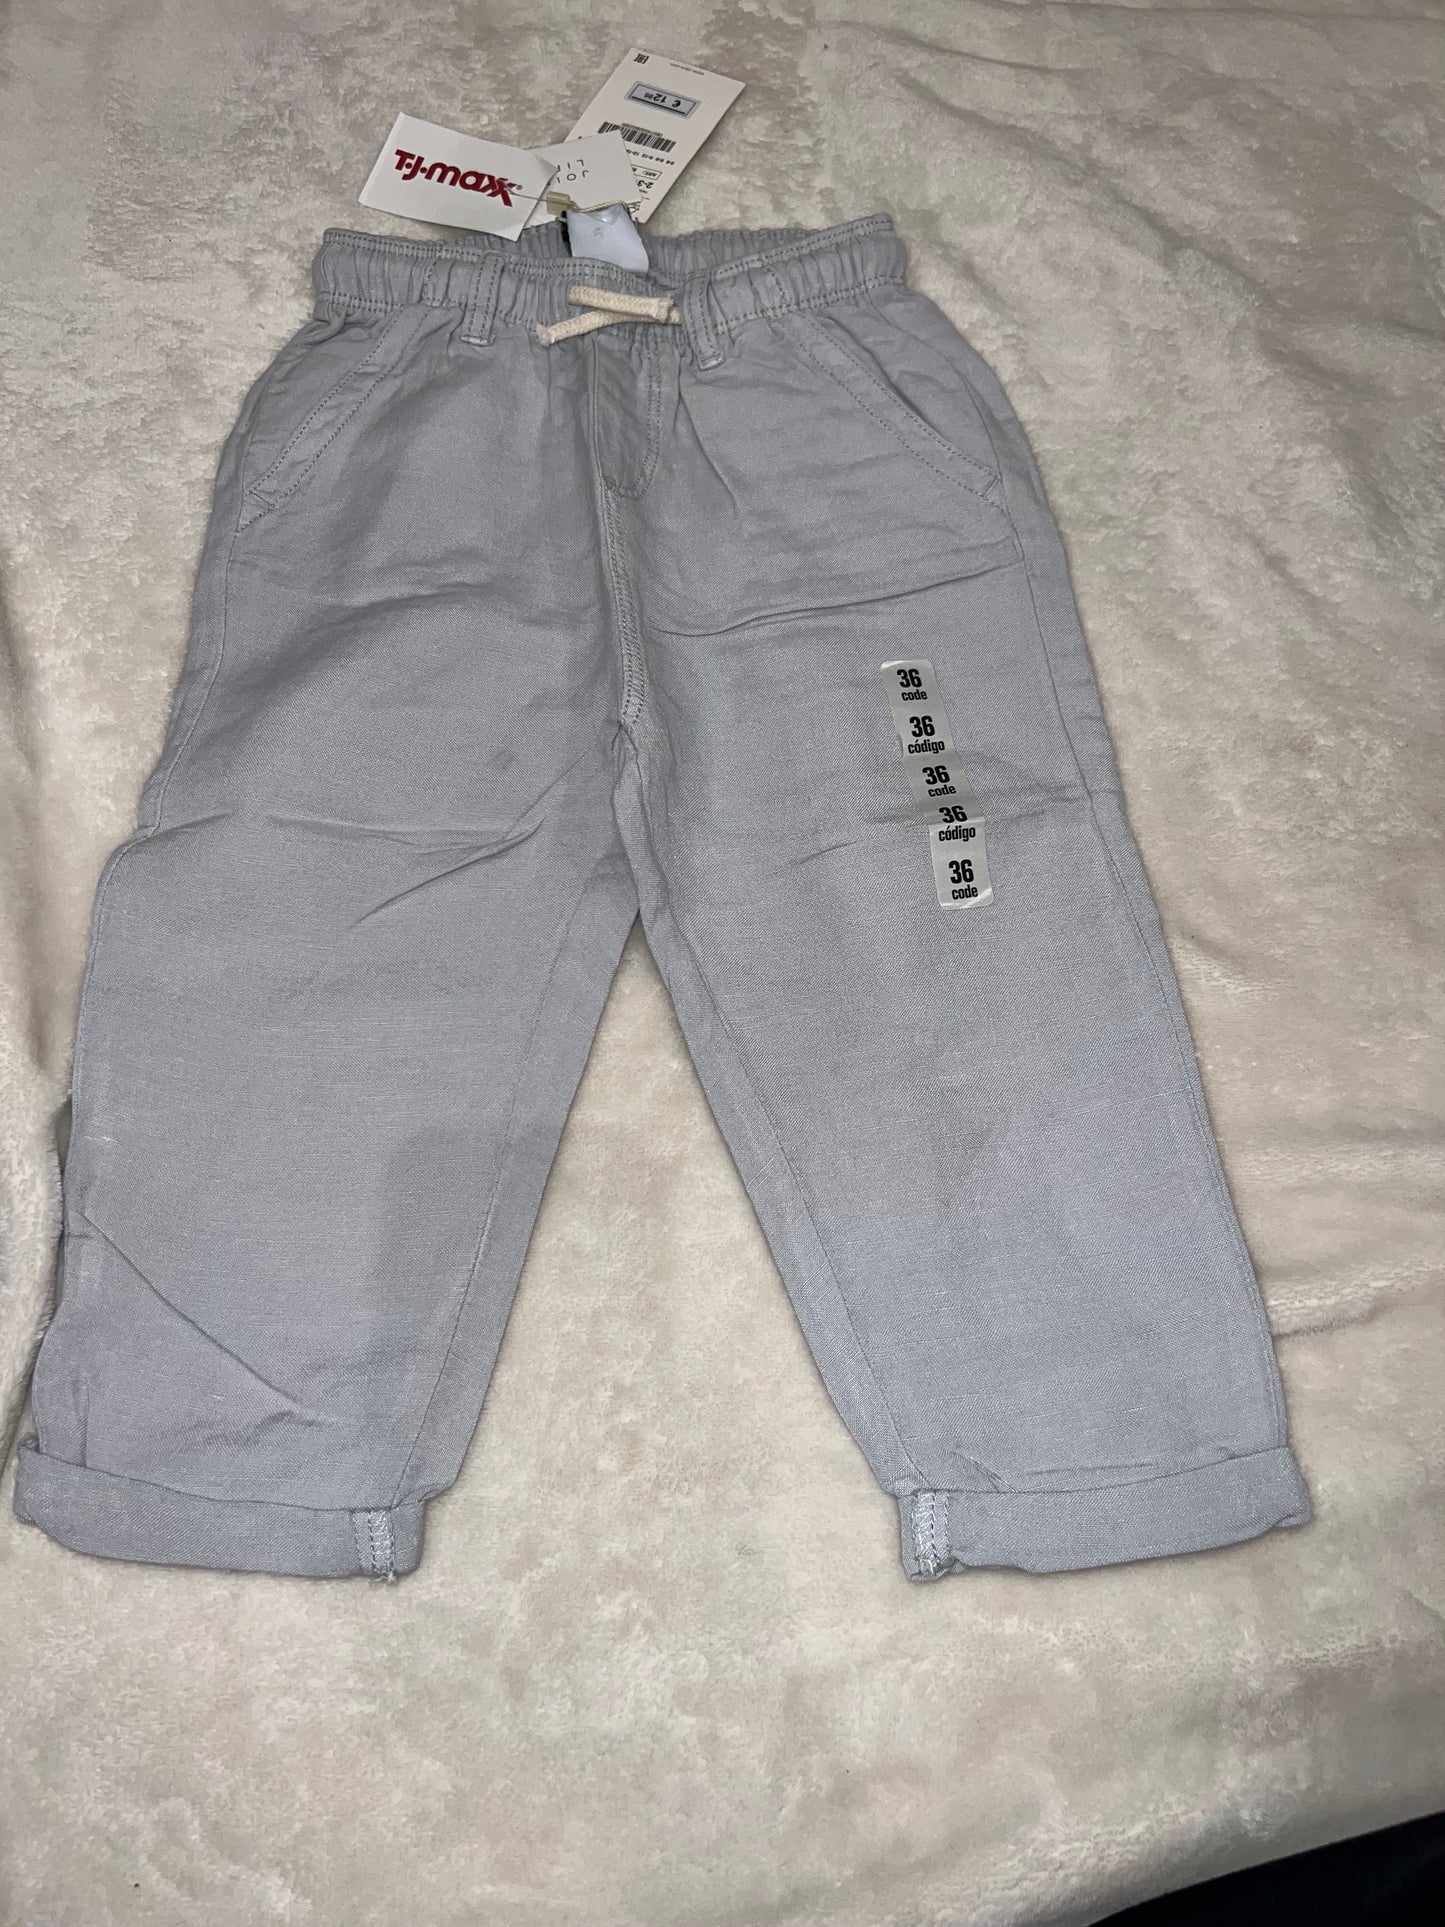 2T Zara pants, NWT, gray linen type material